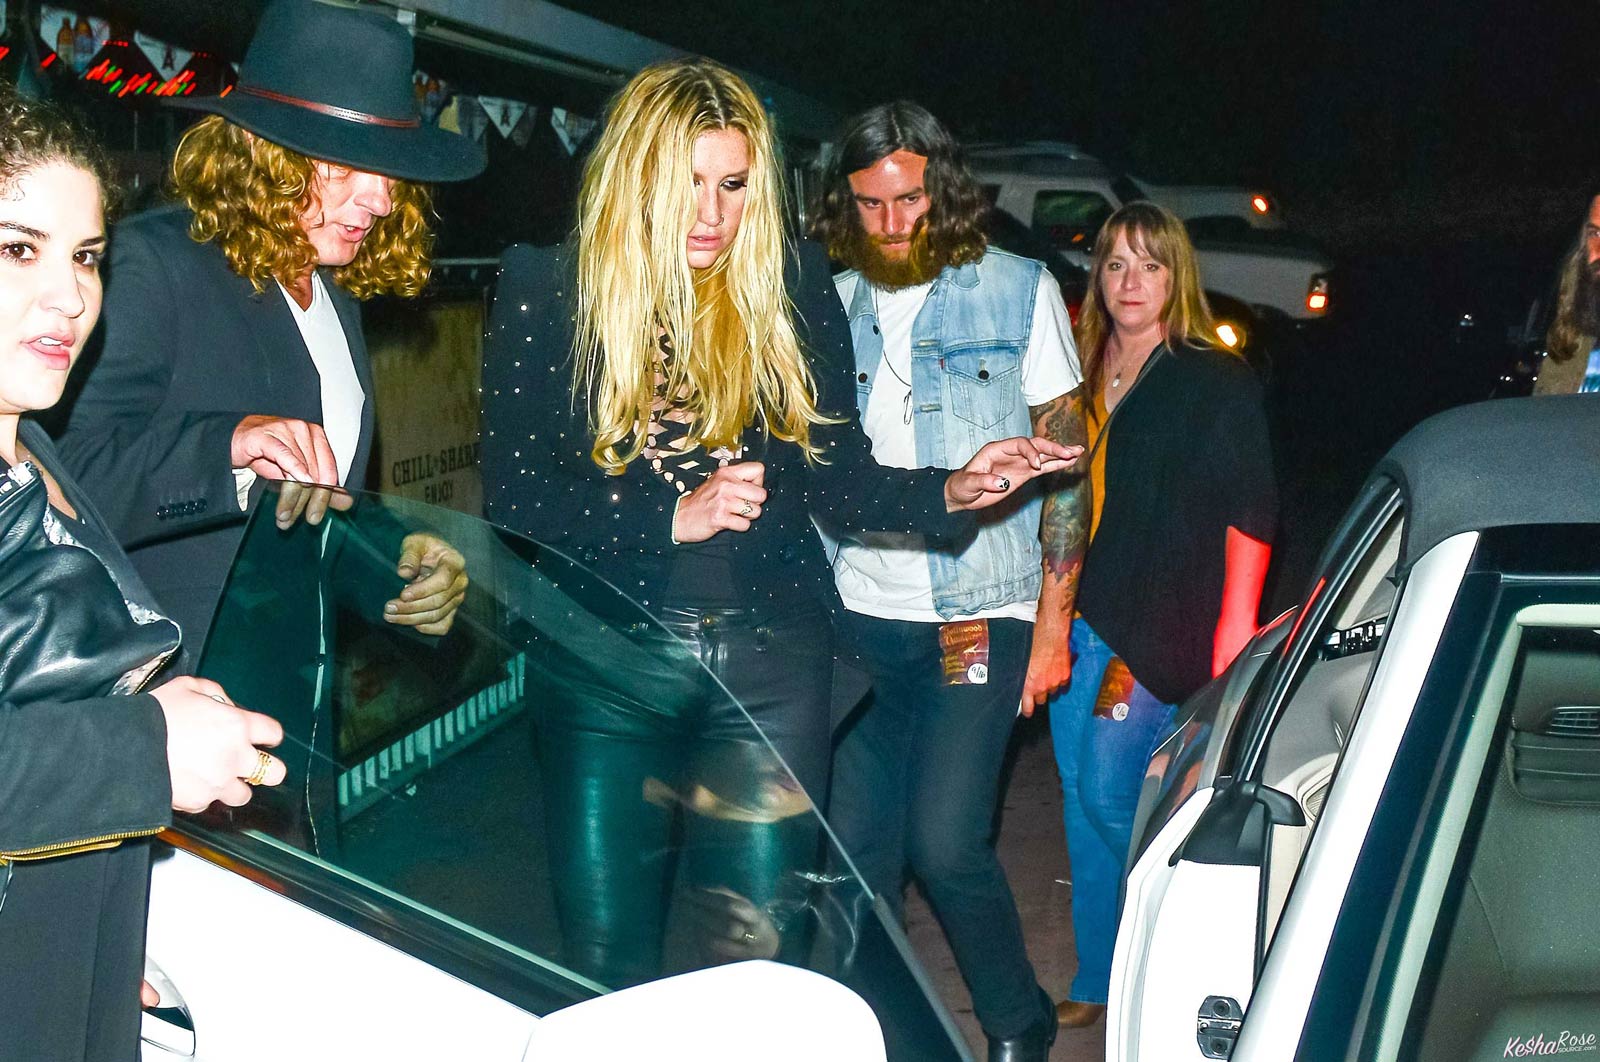 Kesha leaving The Roxy in Hollywood